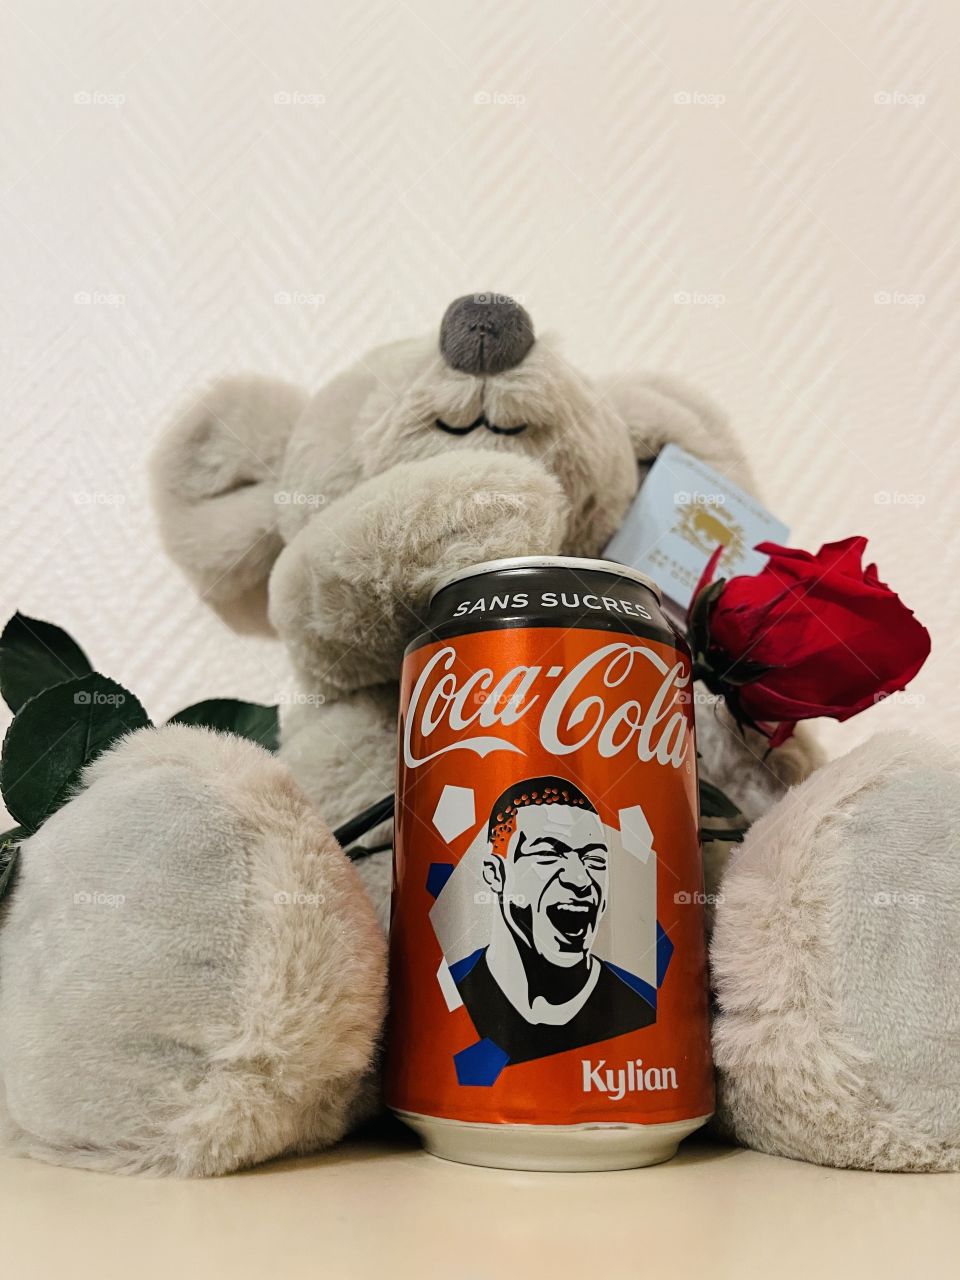 Coca cola gift